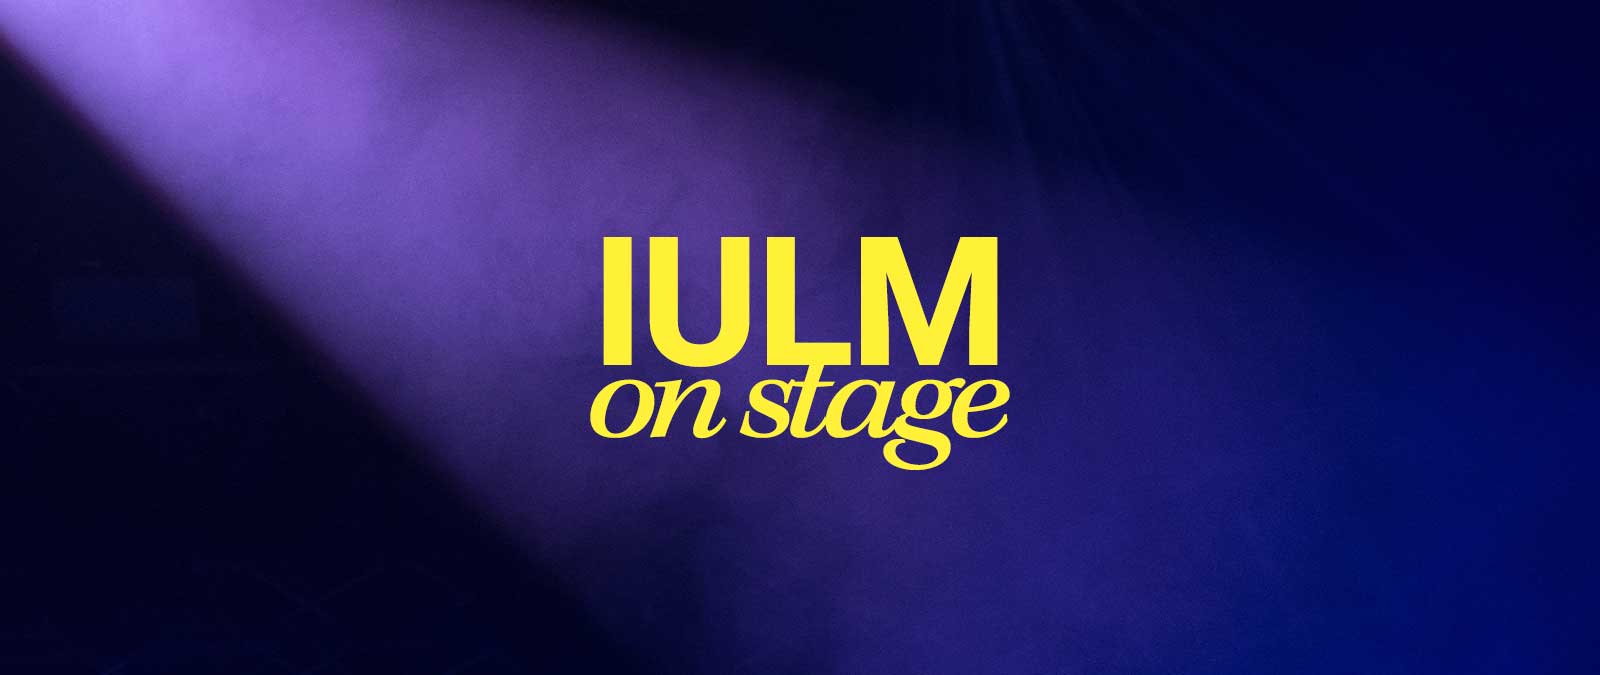 IULM ON STAGE, IULM's University Theatre Center goes on stage!